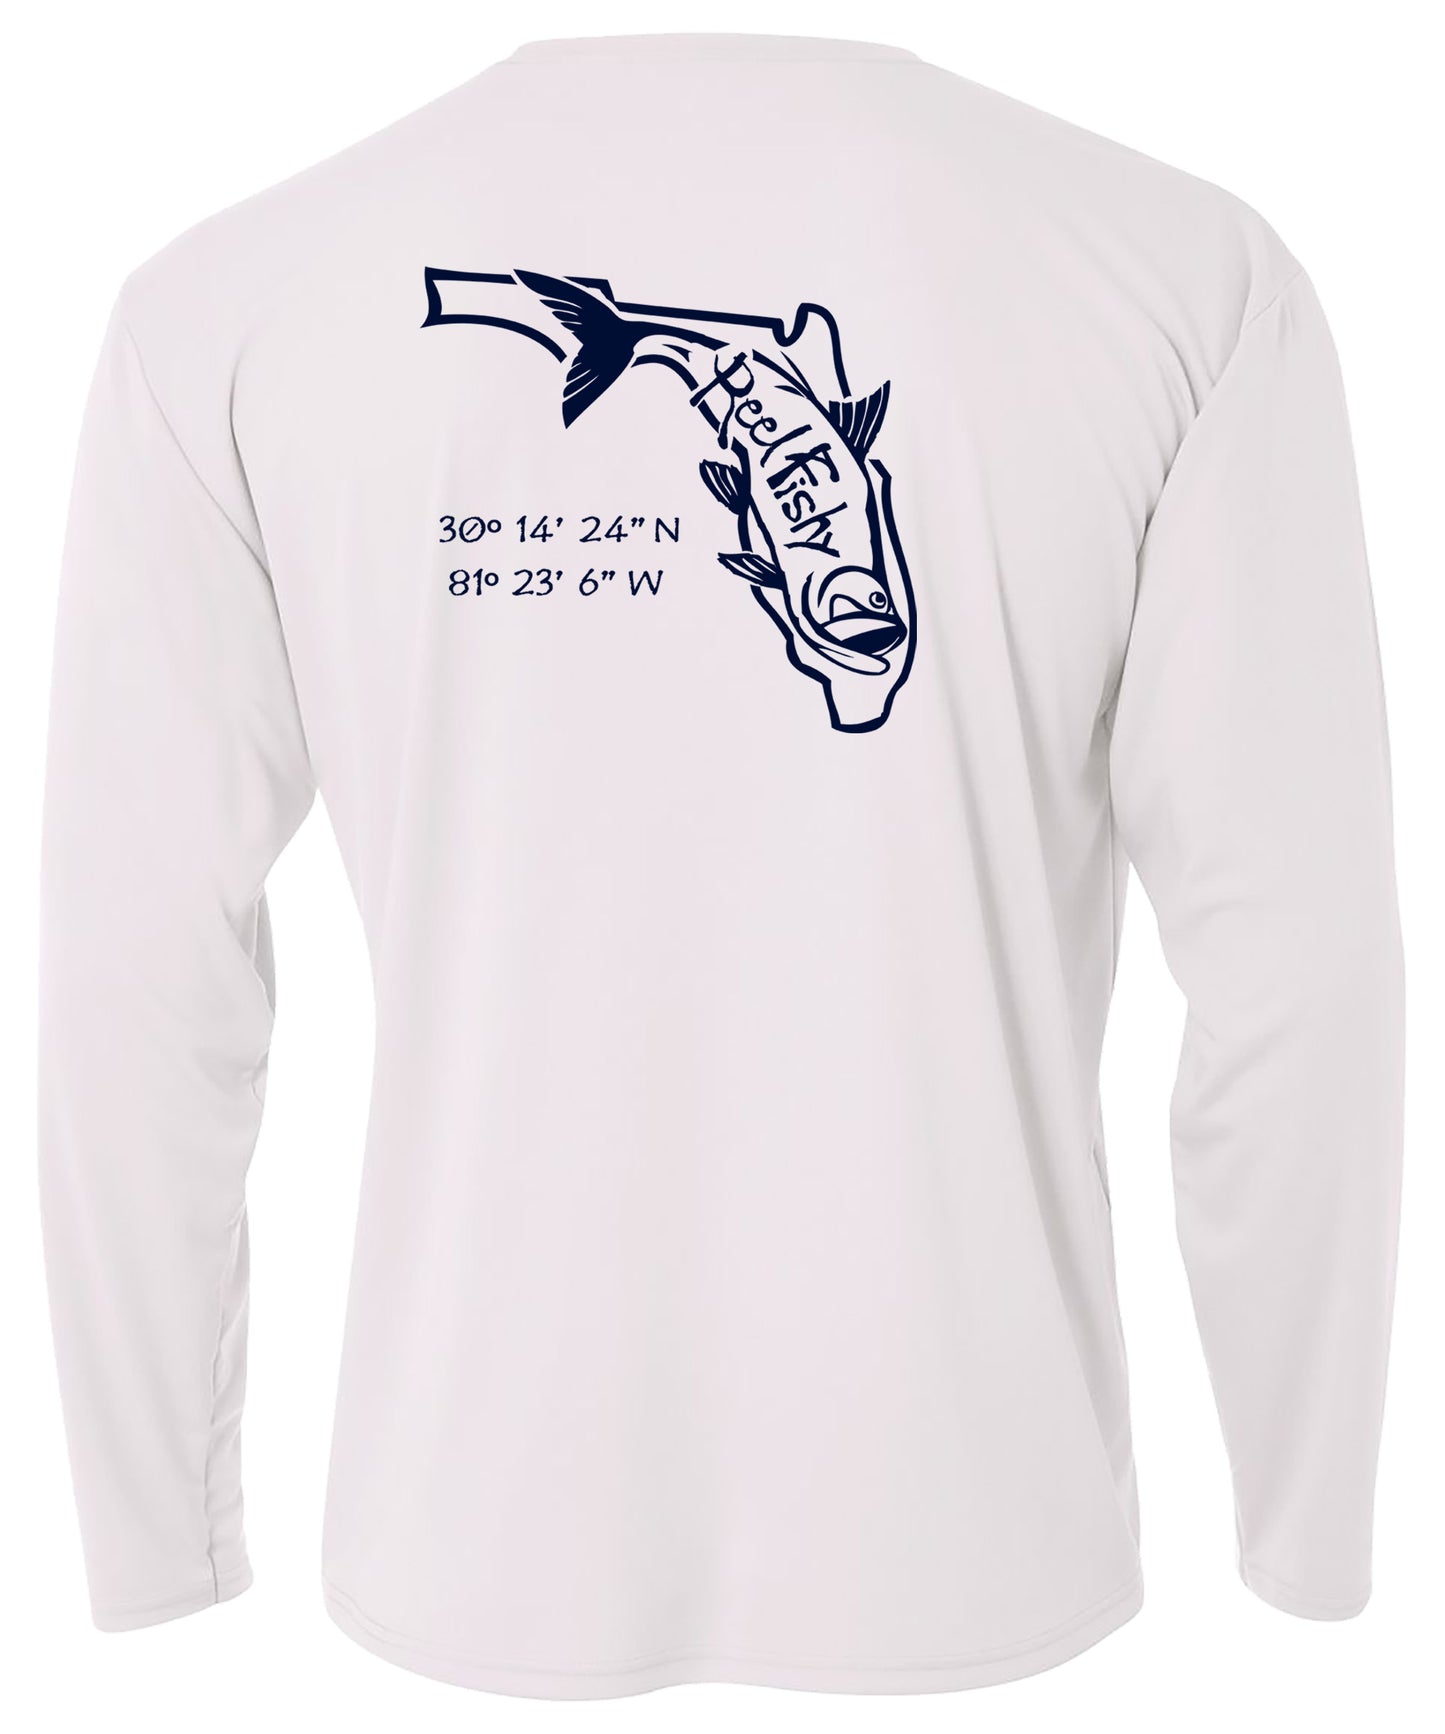 White/Navy Tarpon State of FL Performance Shirts 50+UV Sun Protection Long Sleeves